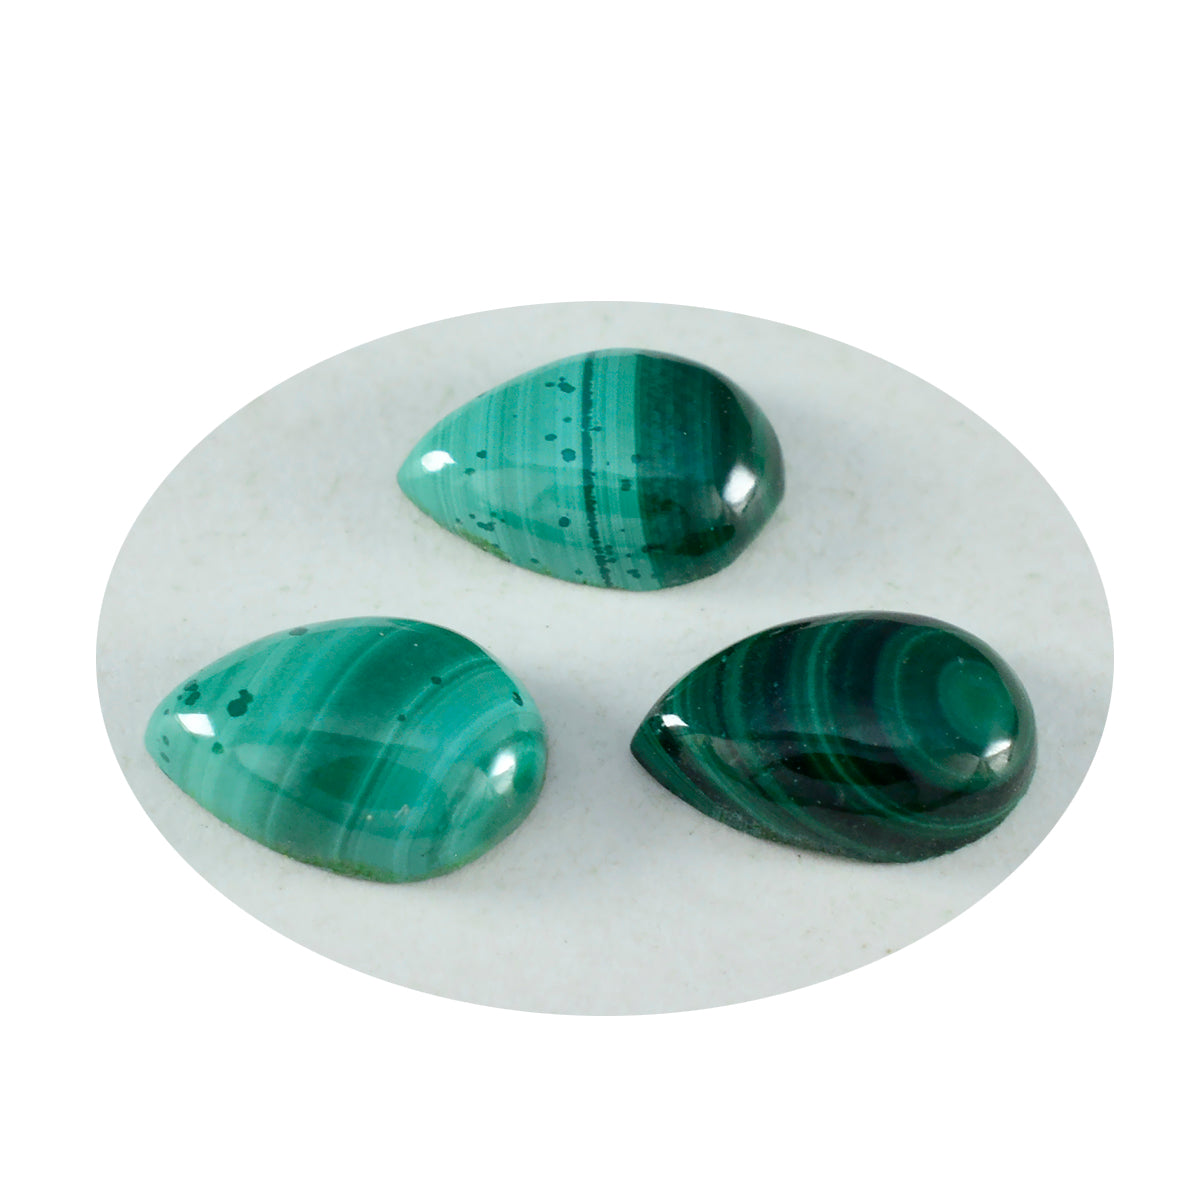 Riyogems 1PC Green Malachite Cabochon 8x12 mm Pear Shape beautiful Quality Loose Stone